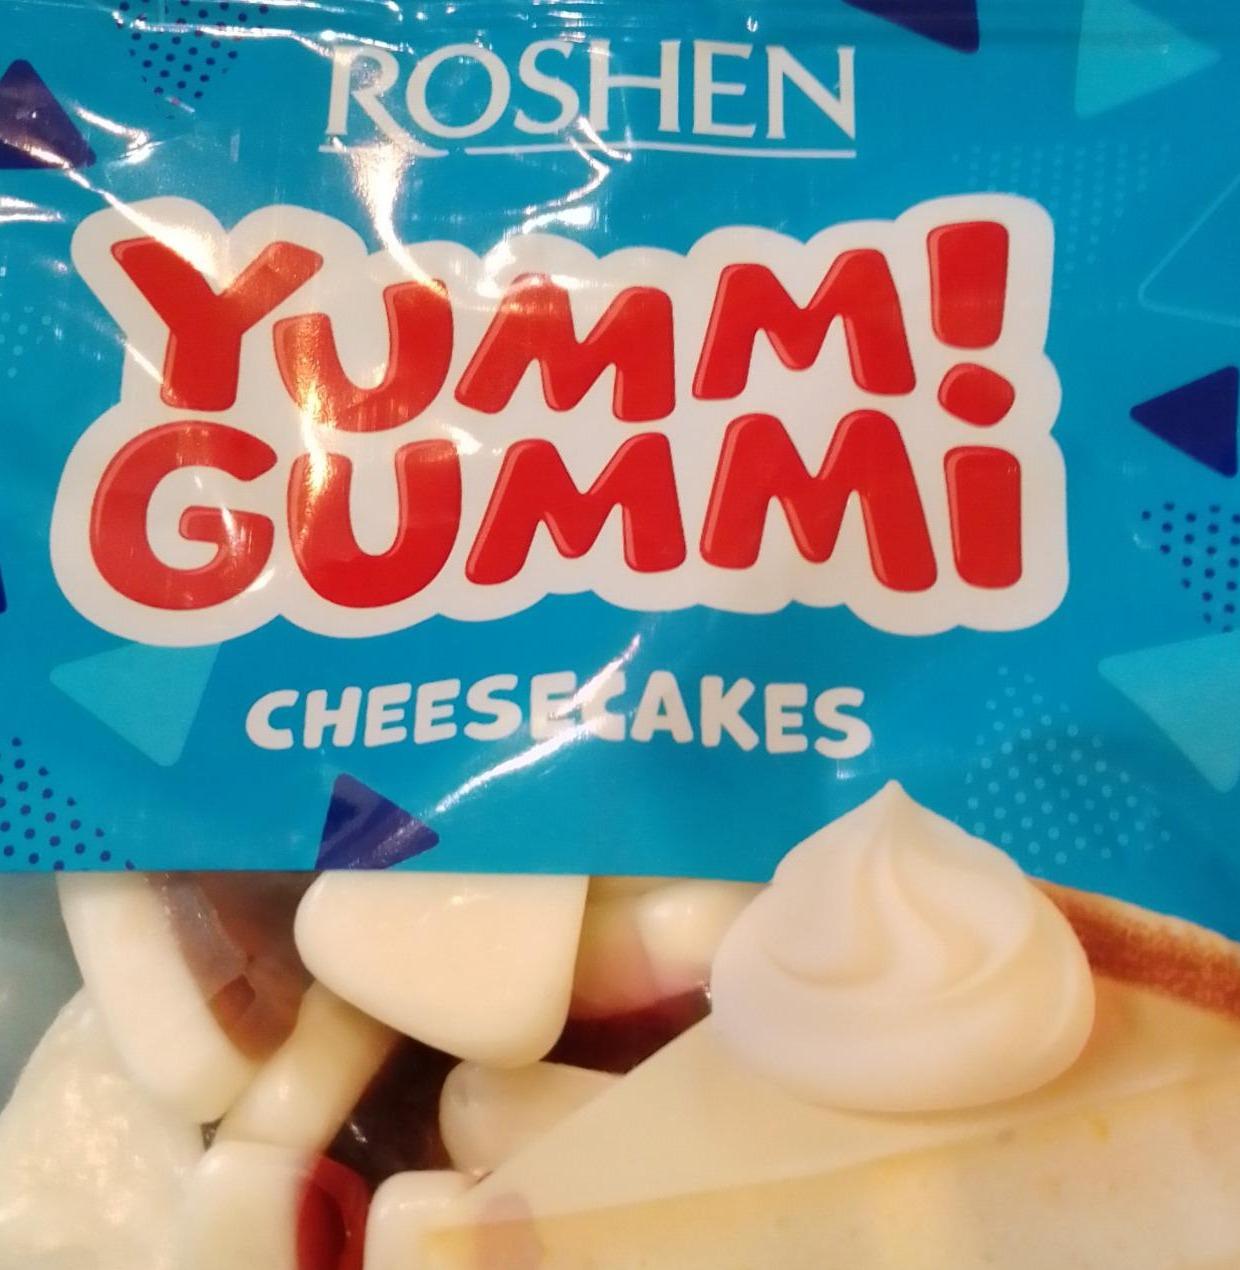 Фото - Цукерки желейні Yummi Gummi Cheesecakes Roshen